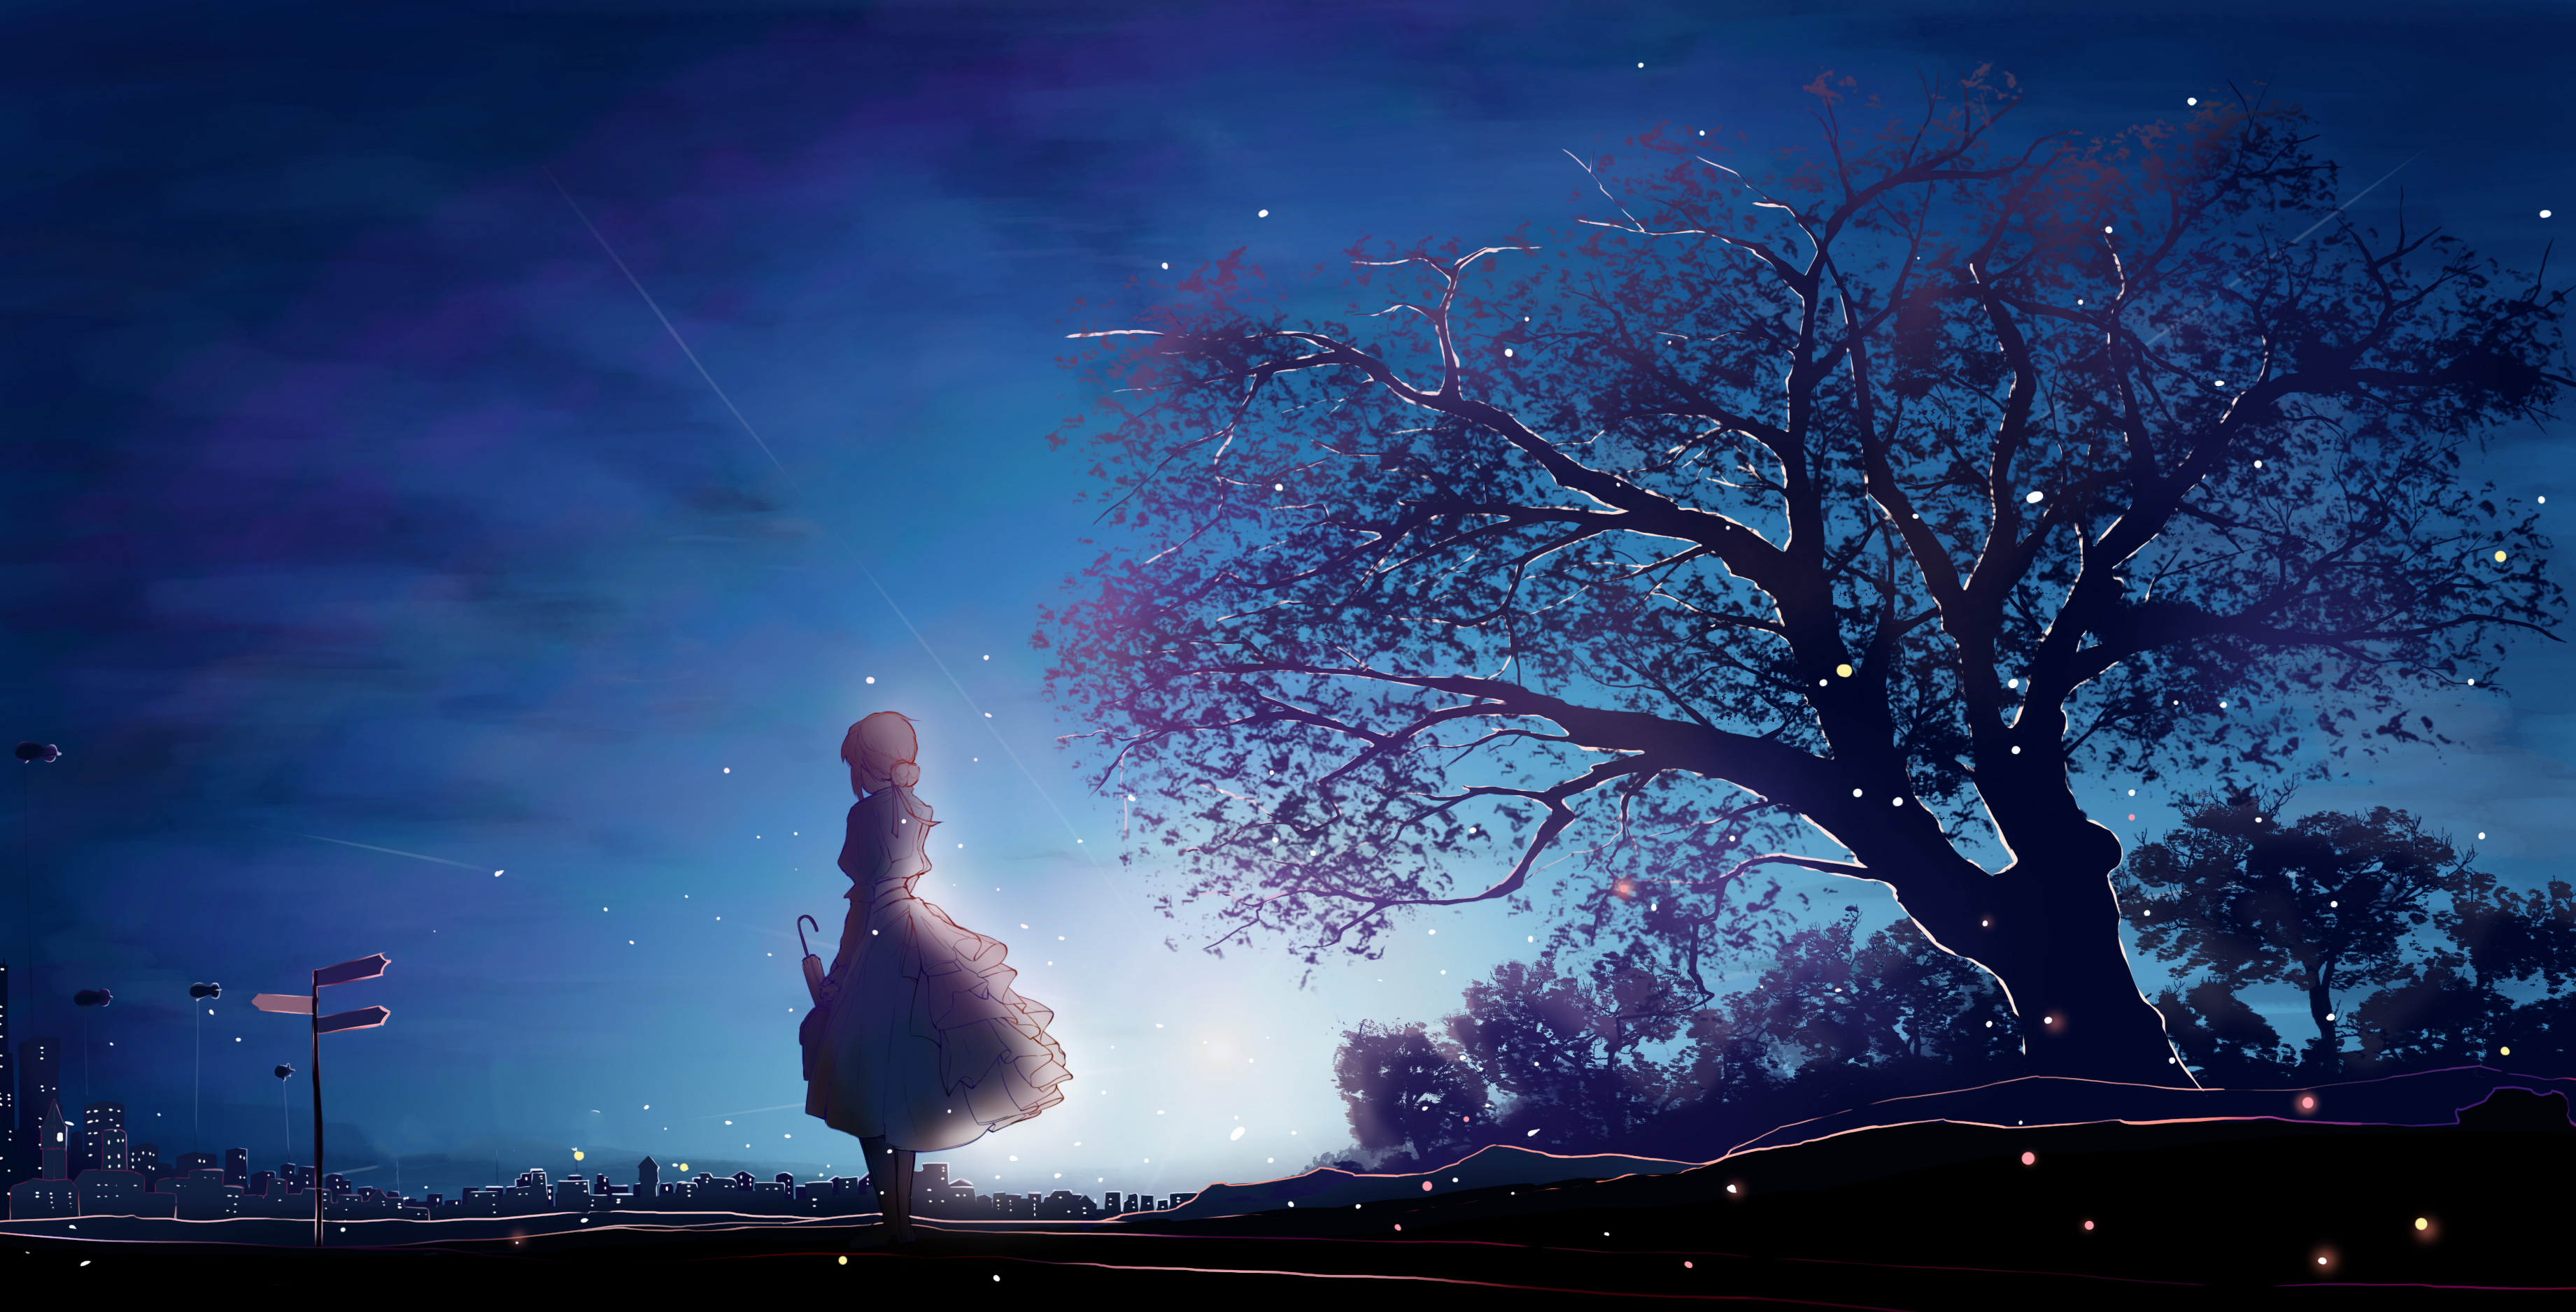 Violet Evergarden 4k, HD Anime, 4k Wallpapers, Images, Backgrounds